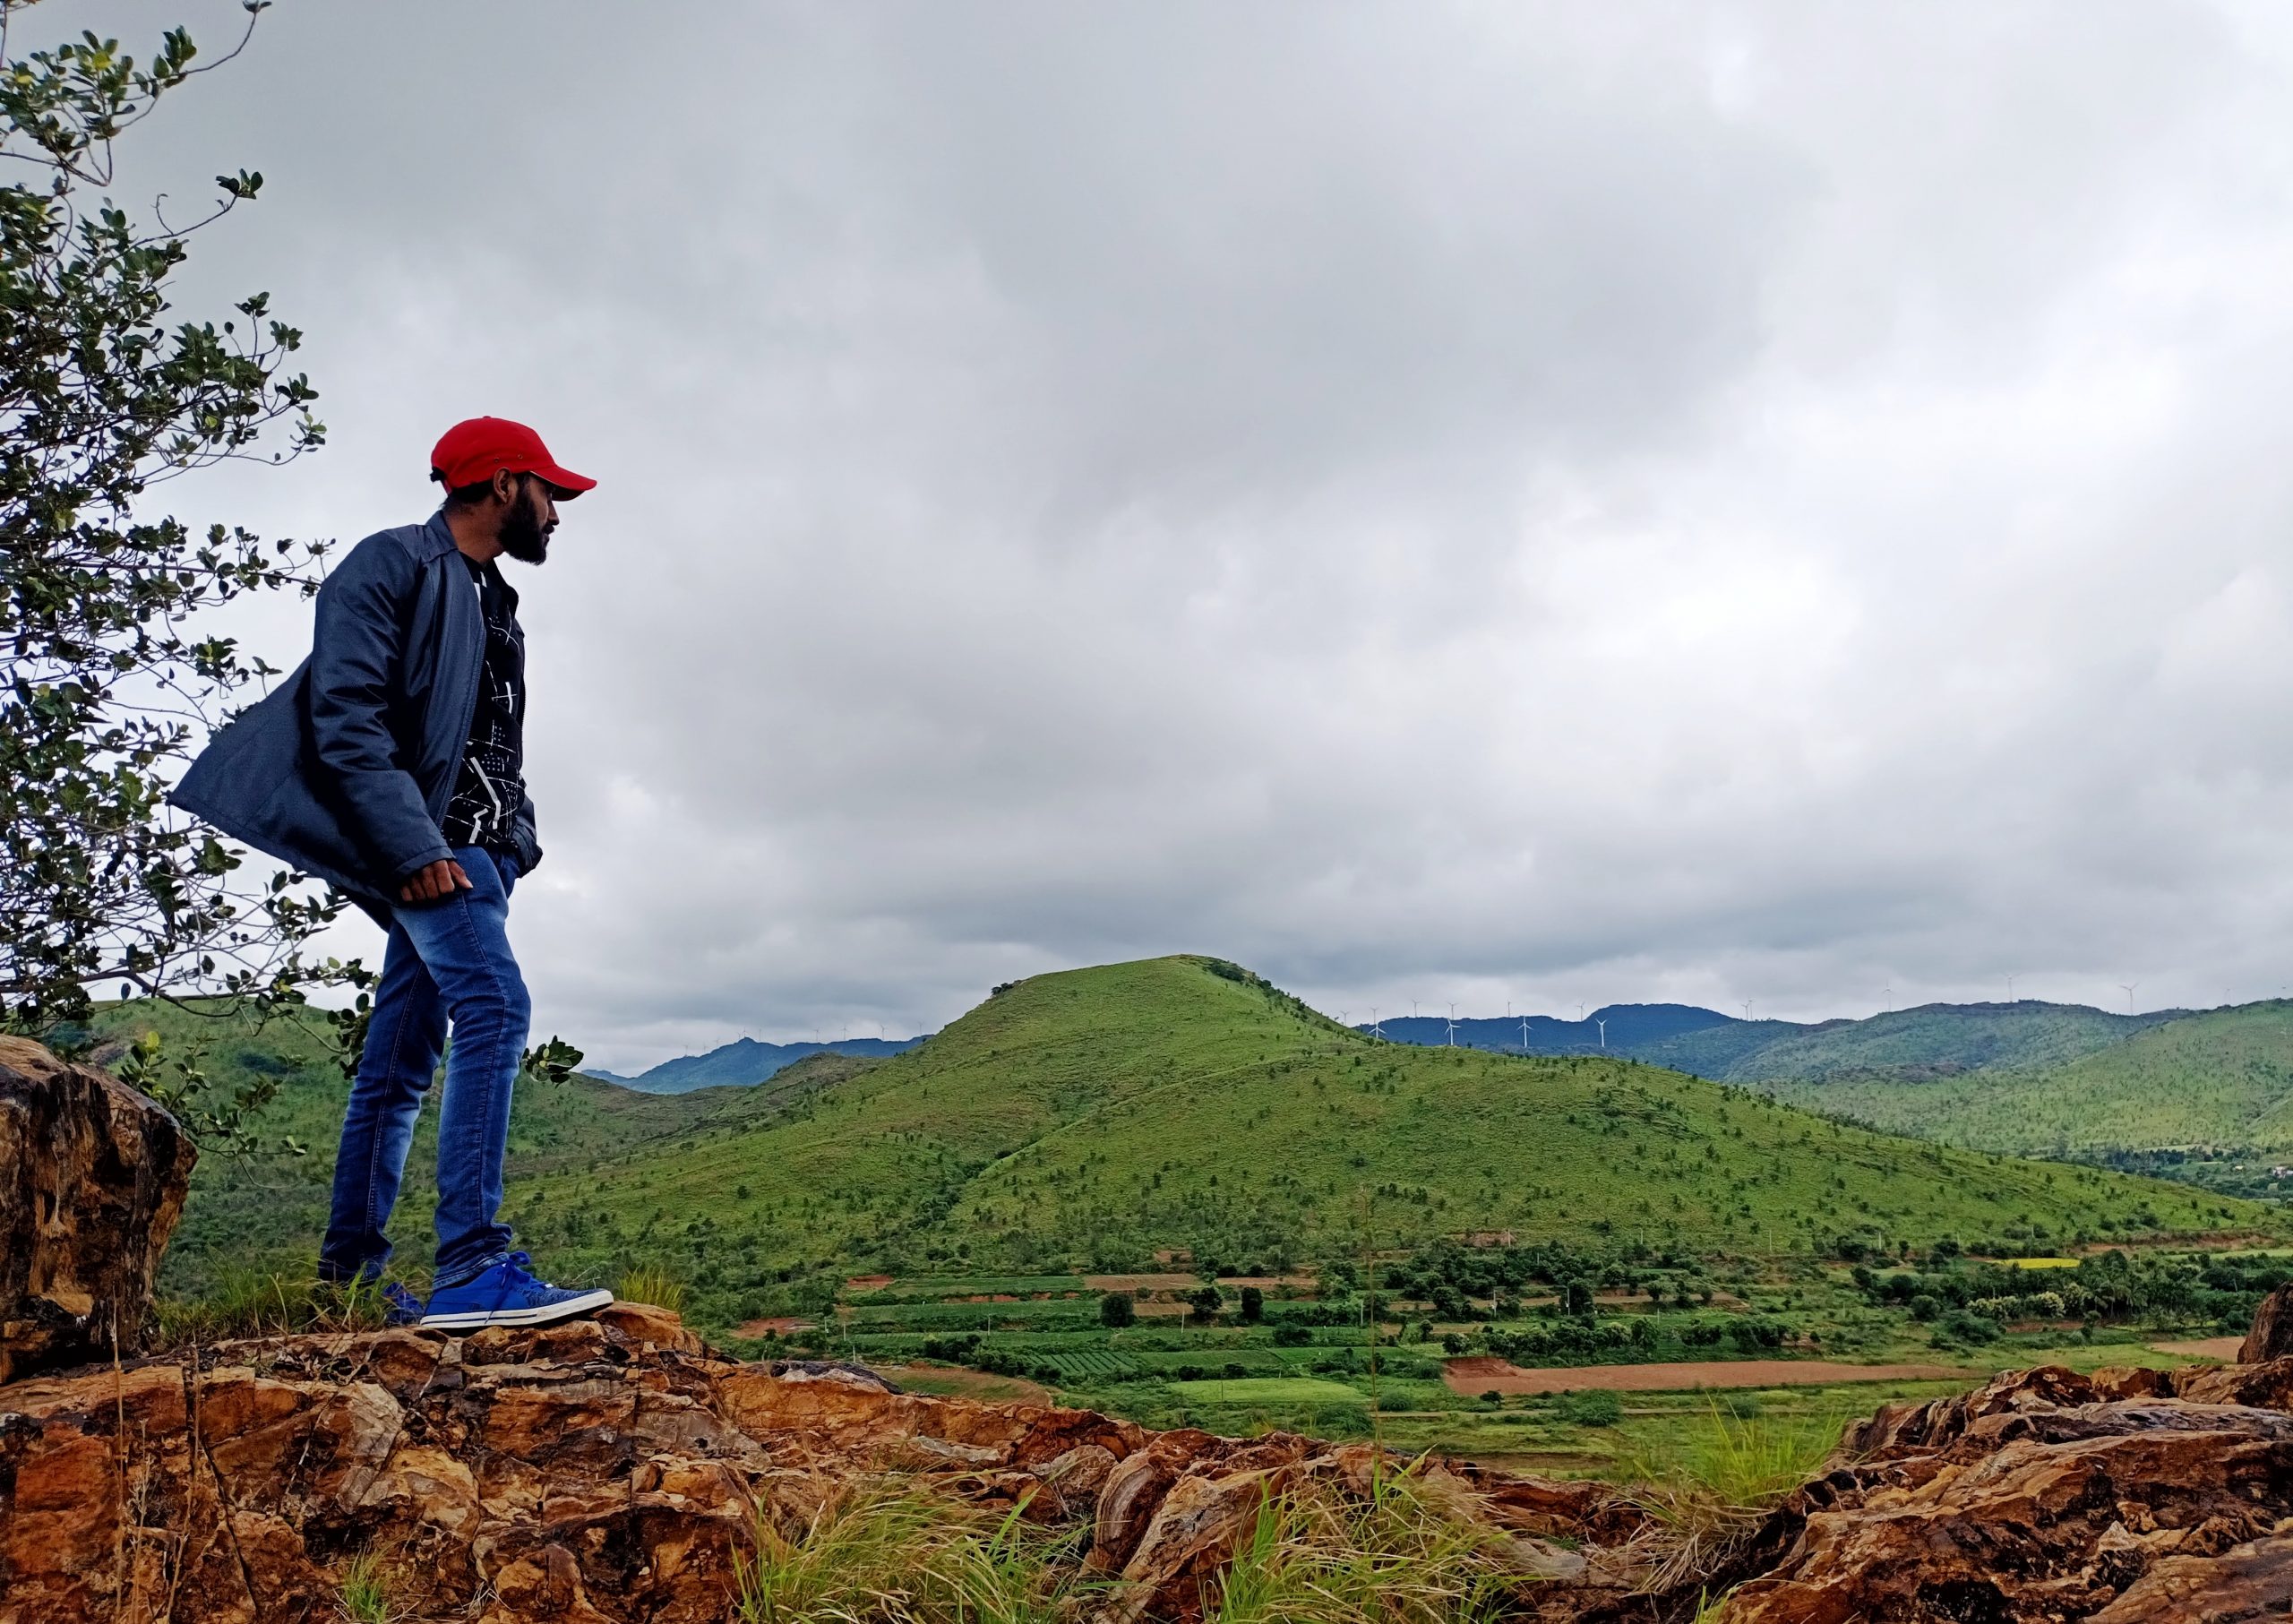 A boy standing on a mountain edge